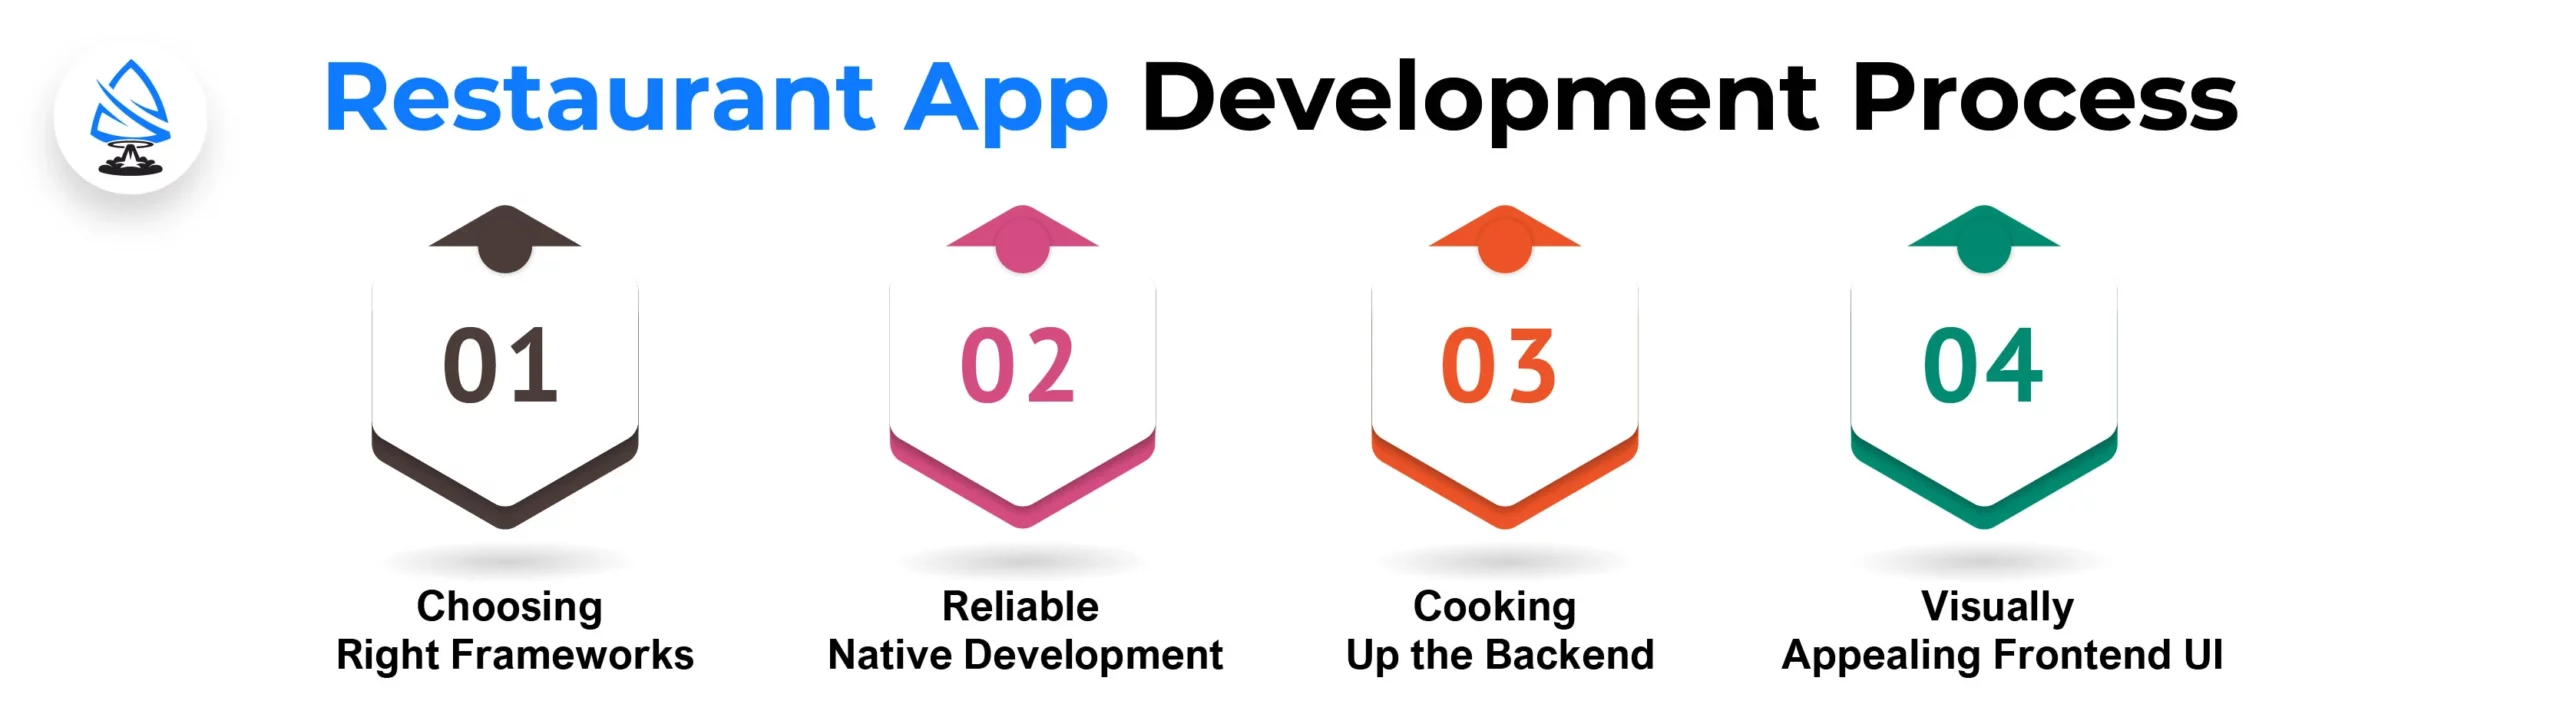 Restaurant App Development Process 